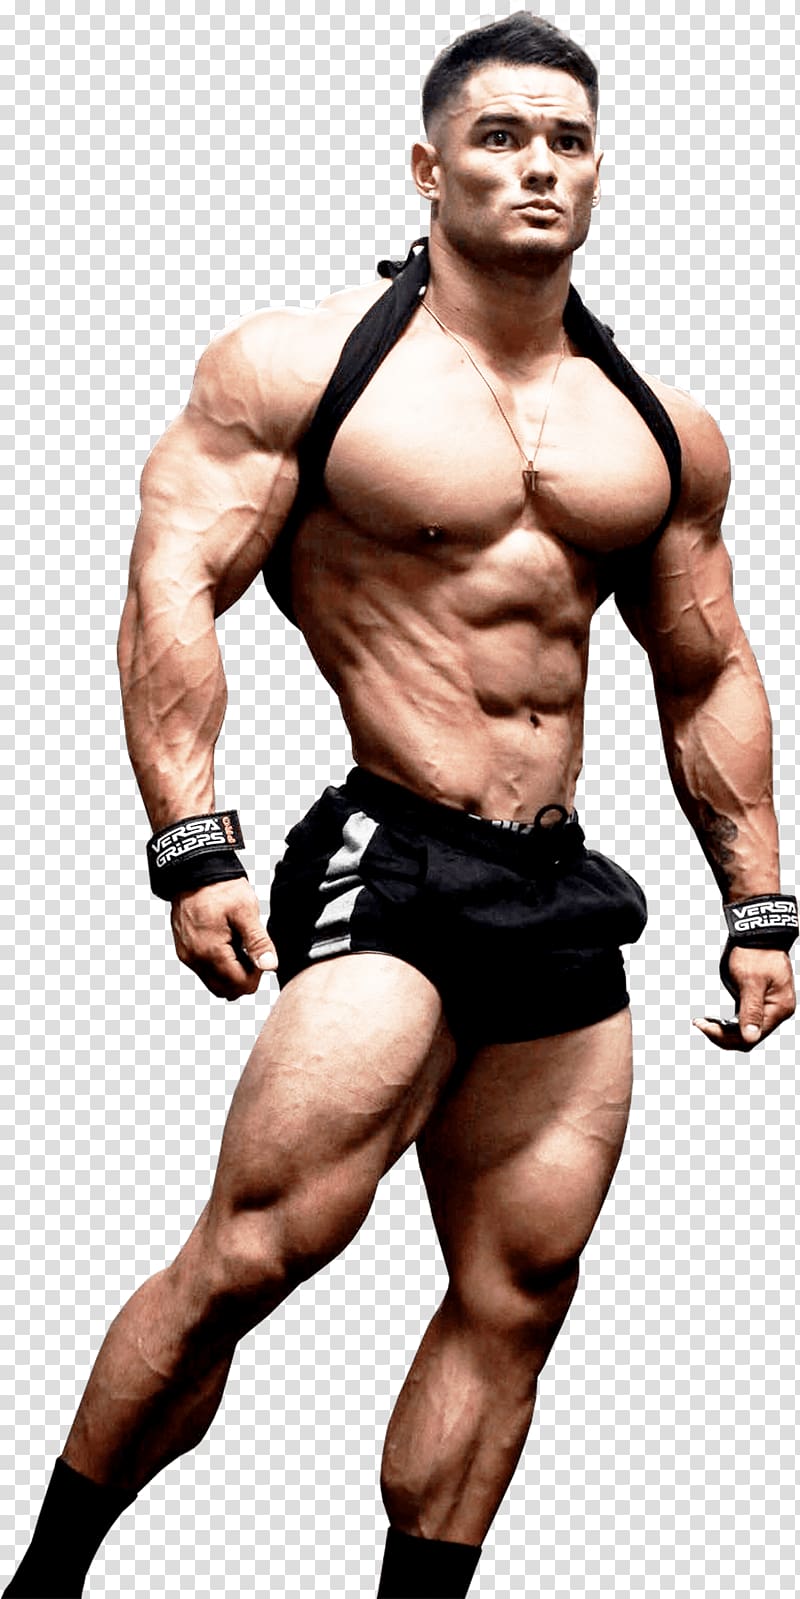 men's black shorts, Jeremy Buendia Human leg Physical fitness Bodybuilding Gluteus maximus muscle, bodybuilding transparent background PNG clipart